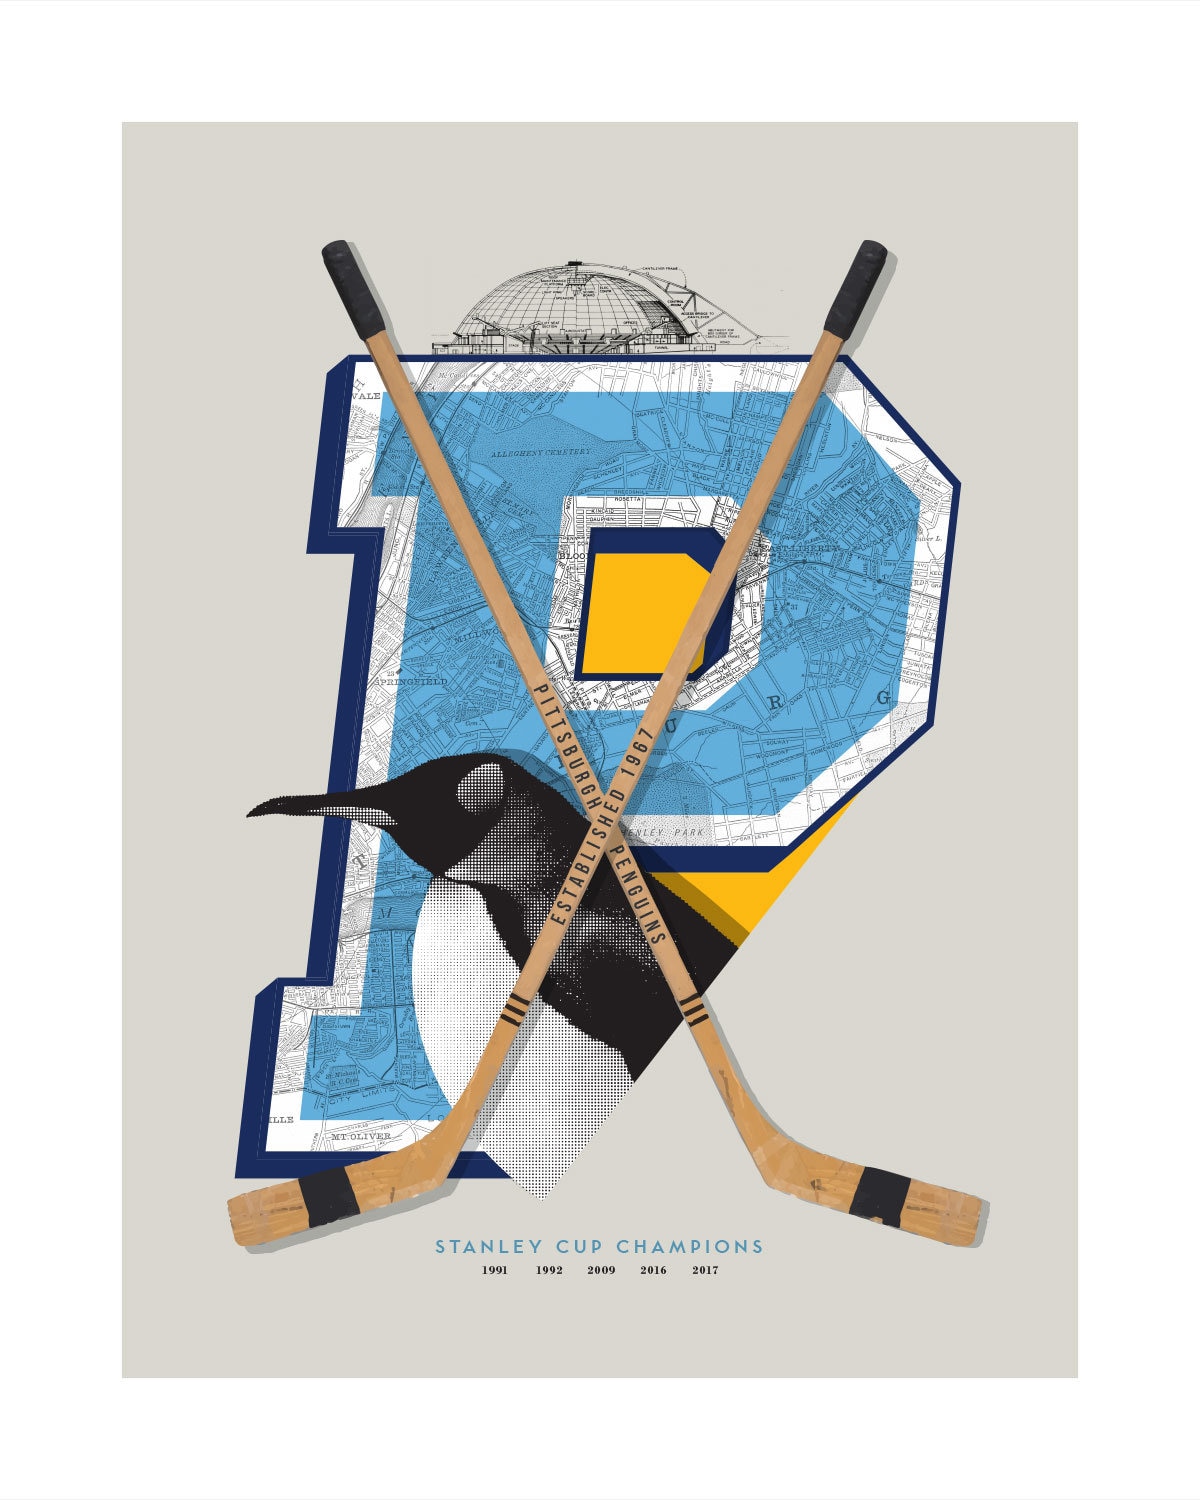 Pittsburg Penguins, hockey, nhl, HD phone wallpaper